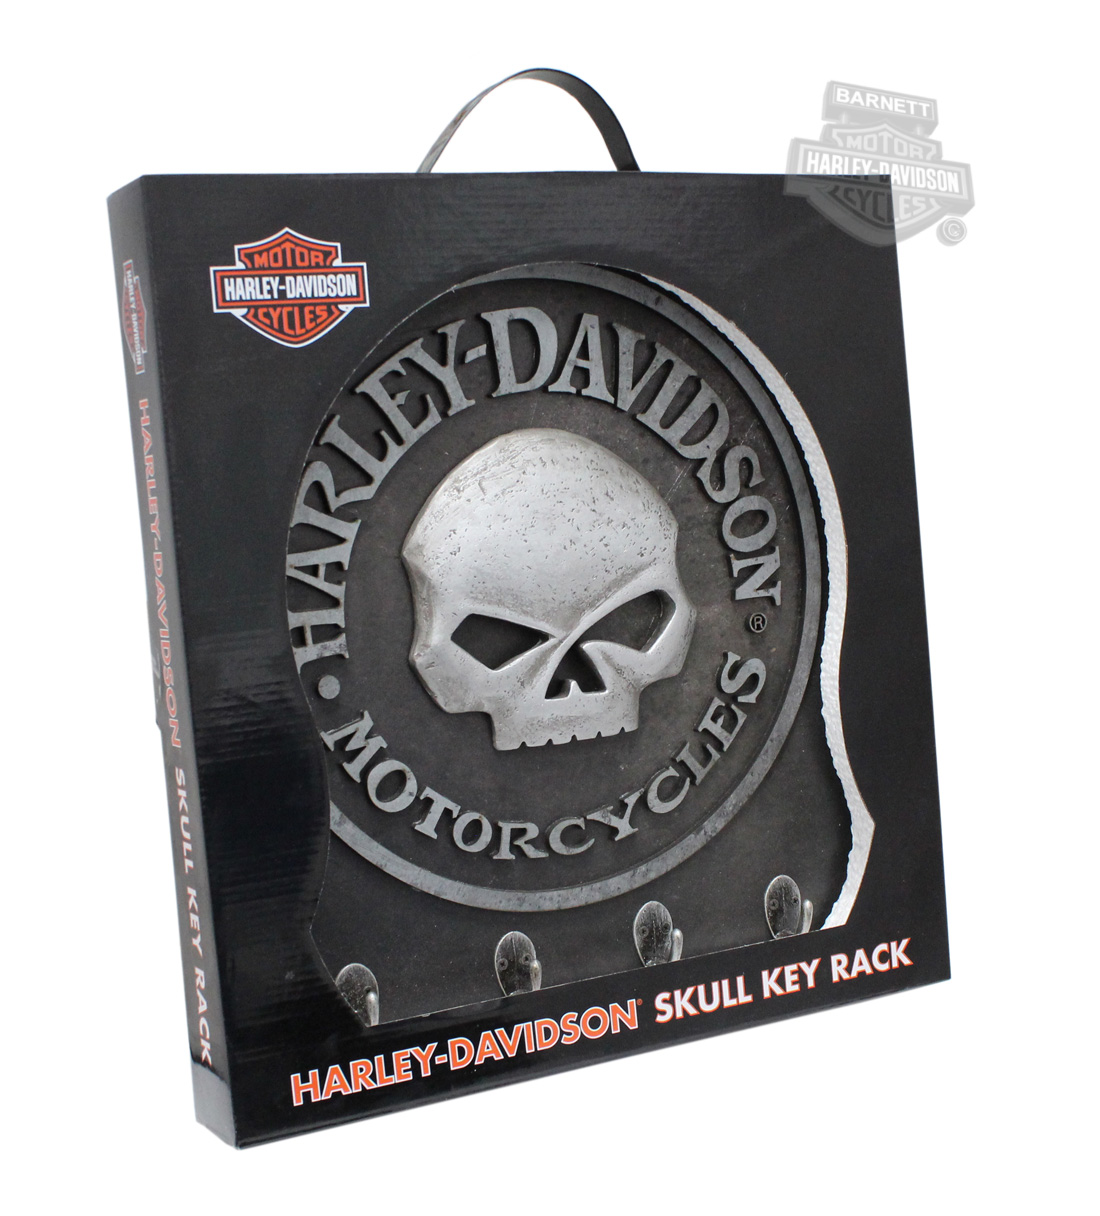 Harley Davidson Willie G Skull